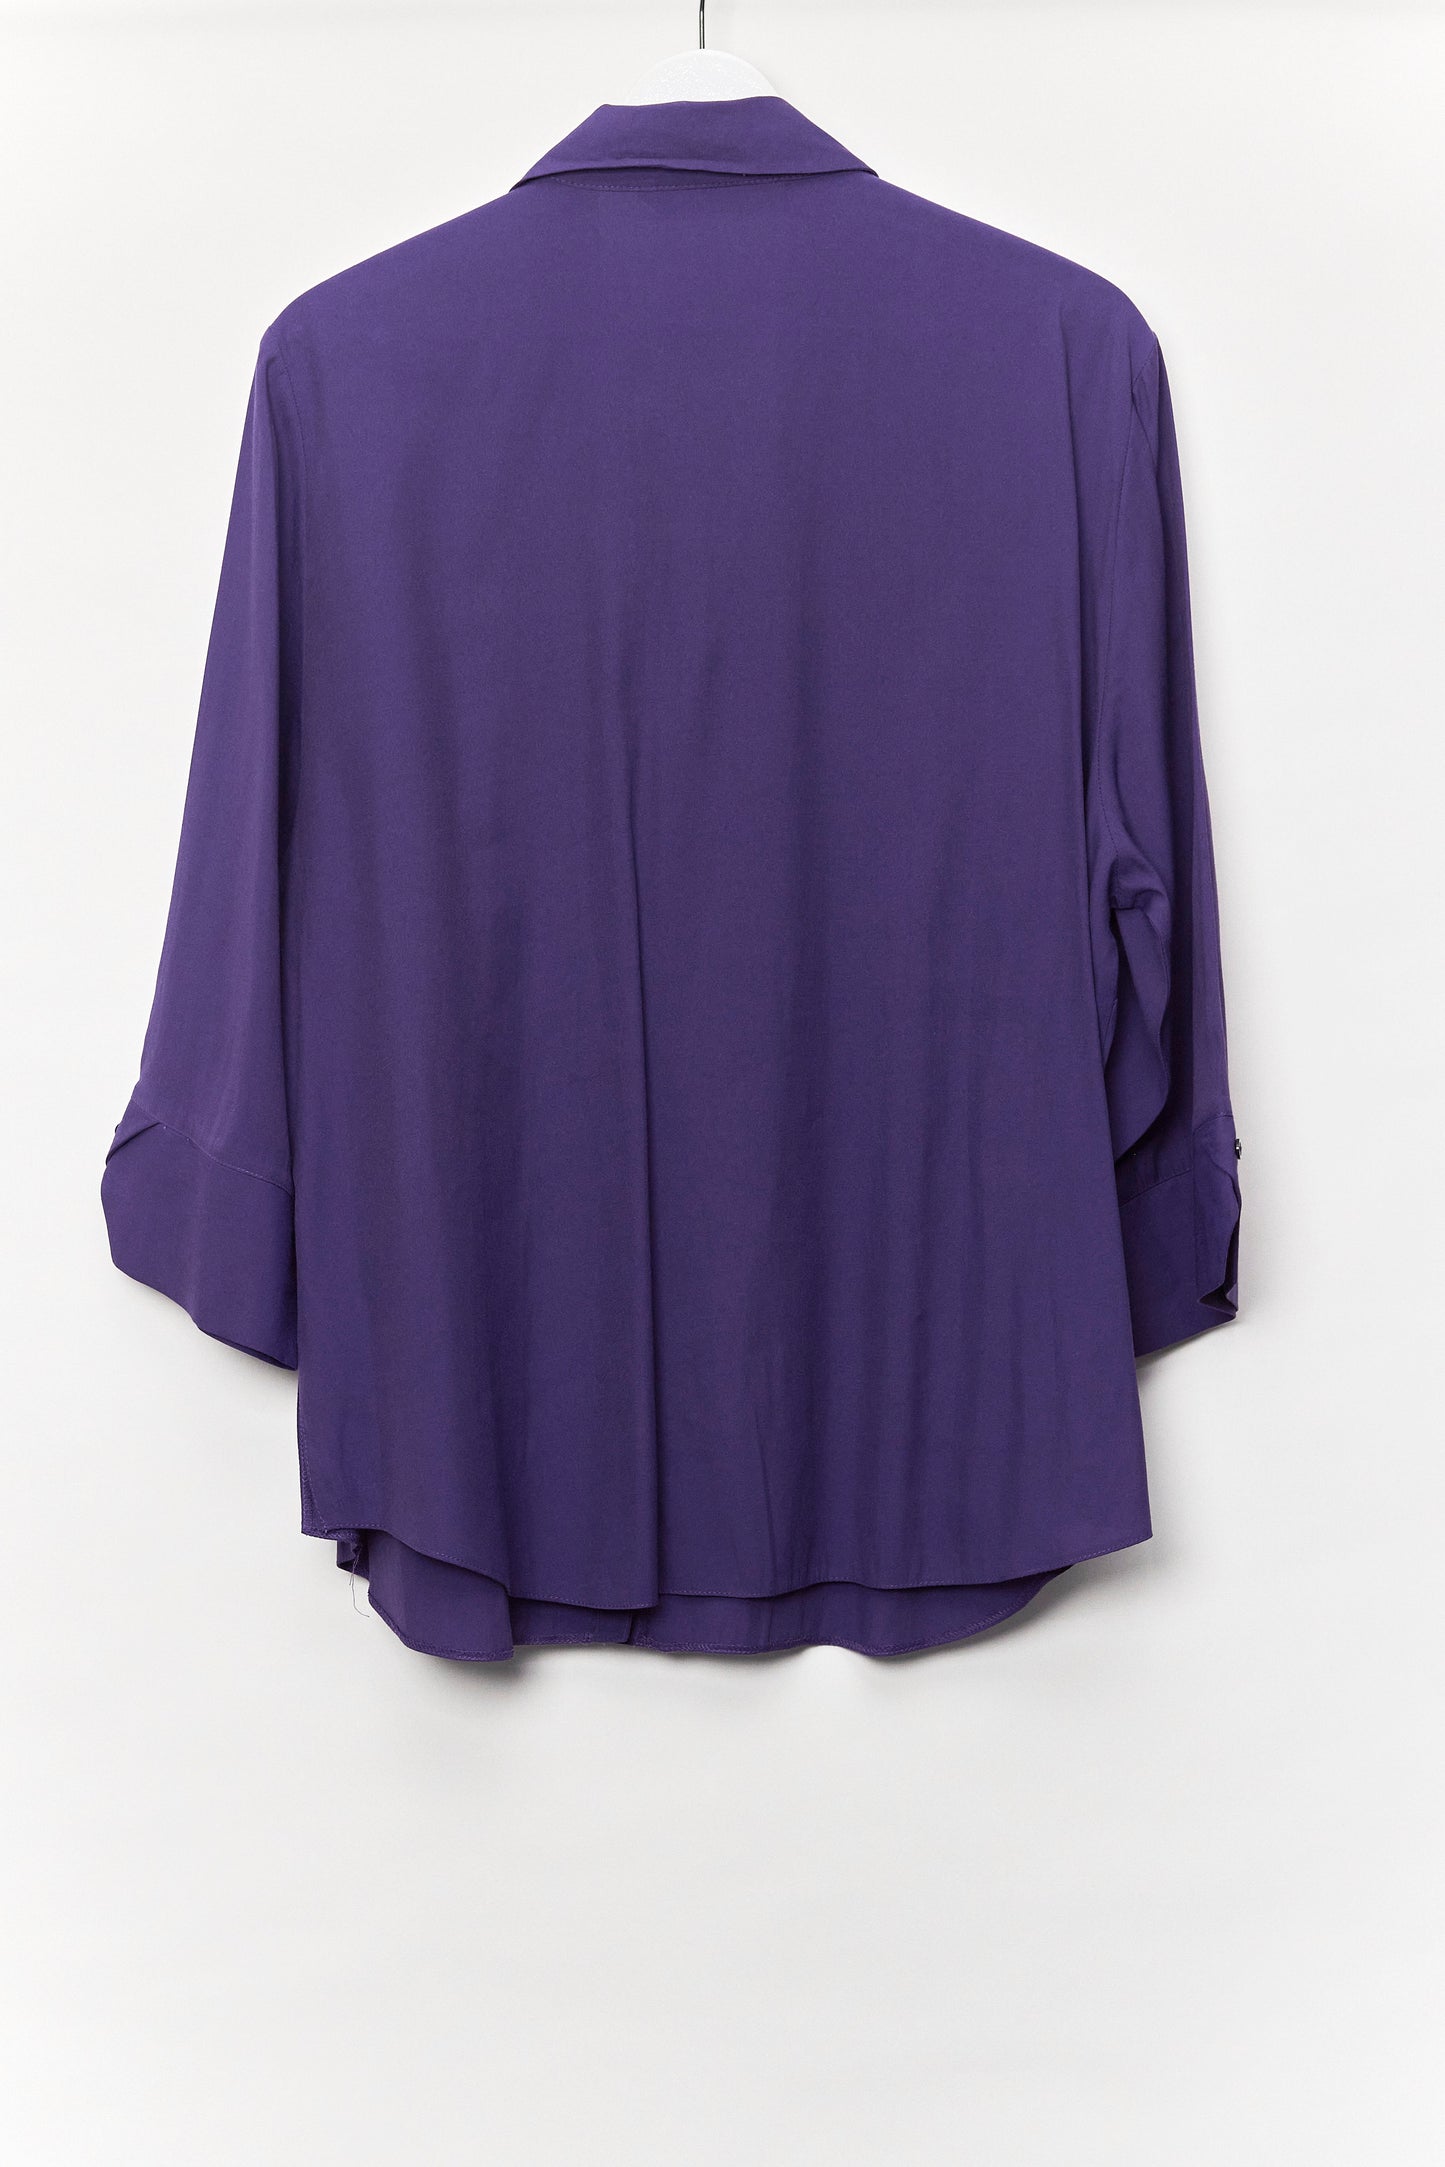 Womens Essence Purple 3/4 Sleeve Blouse Size 20